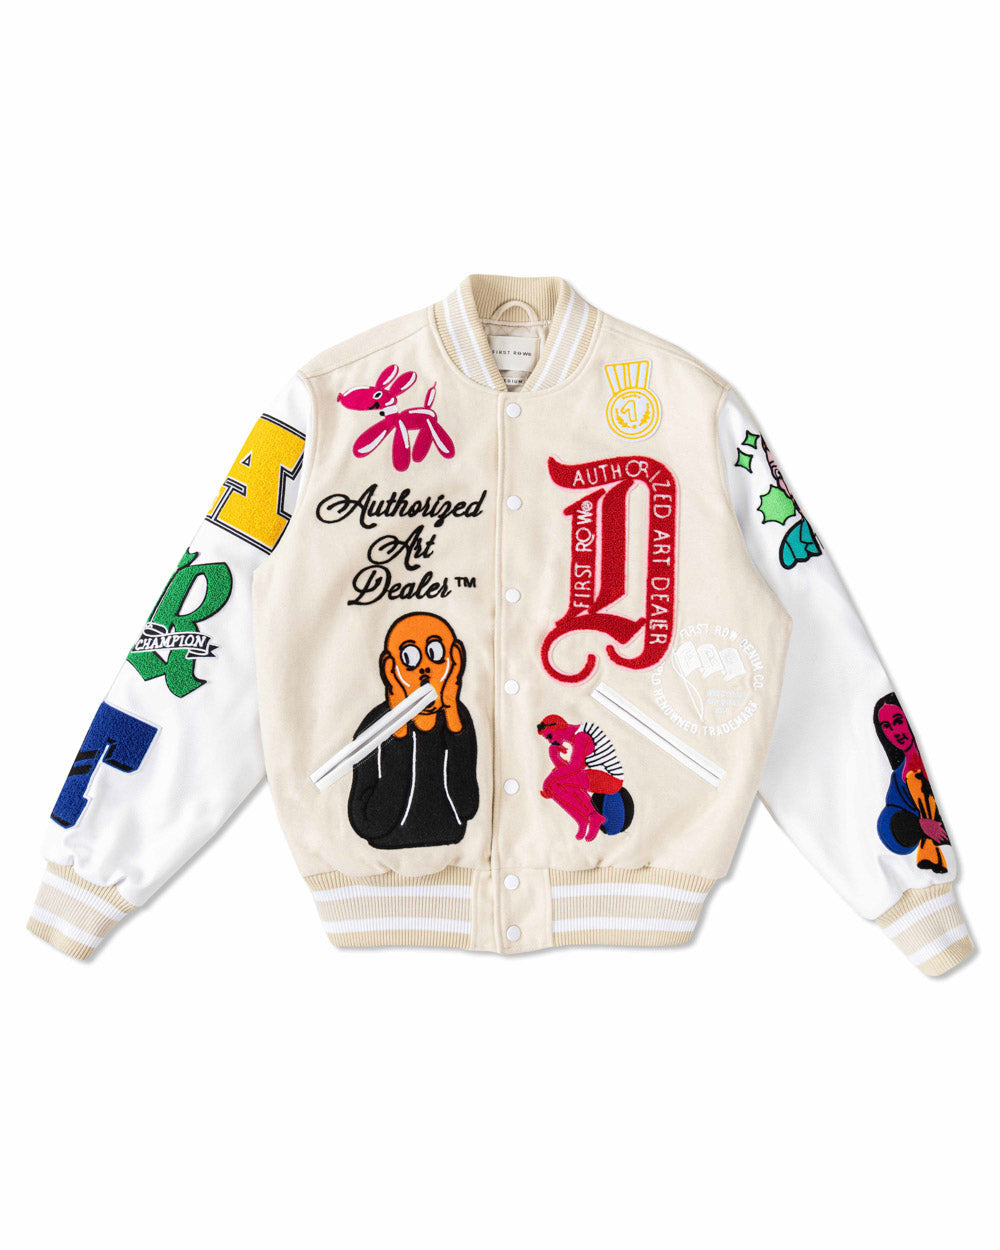 Art Dealer 90’s Varsity Jacket